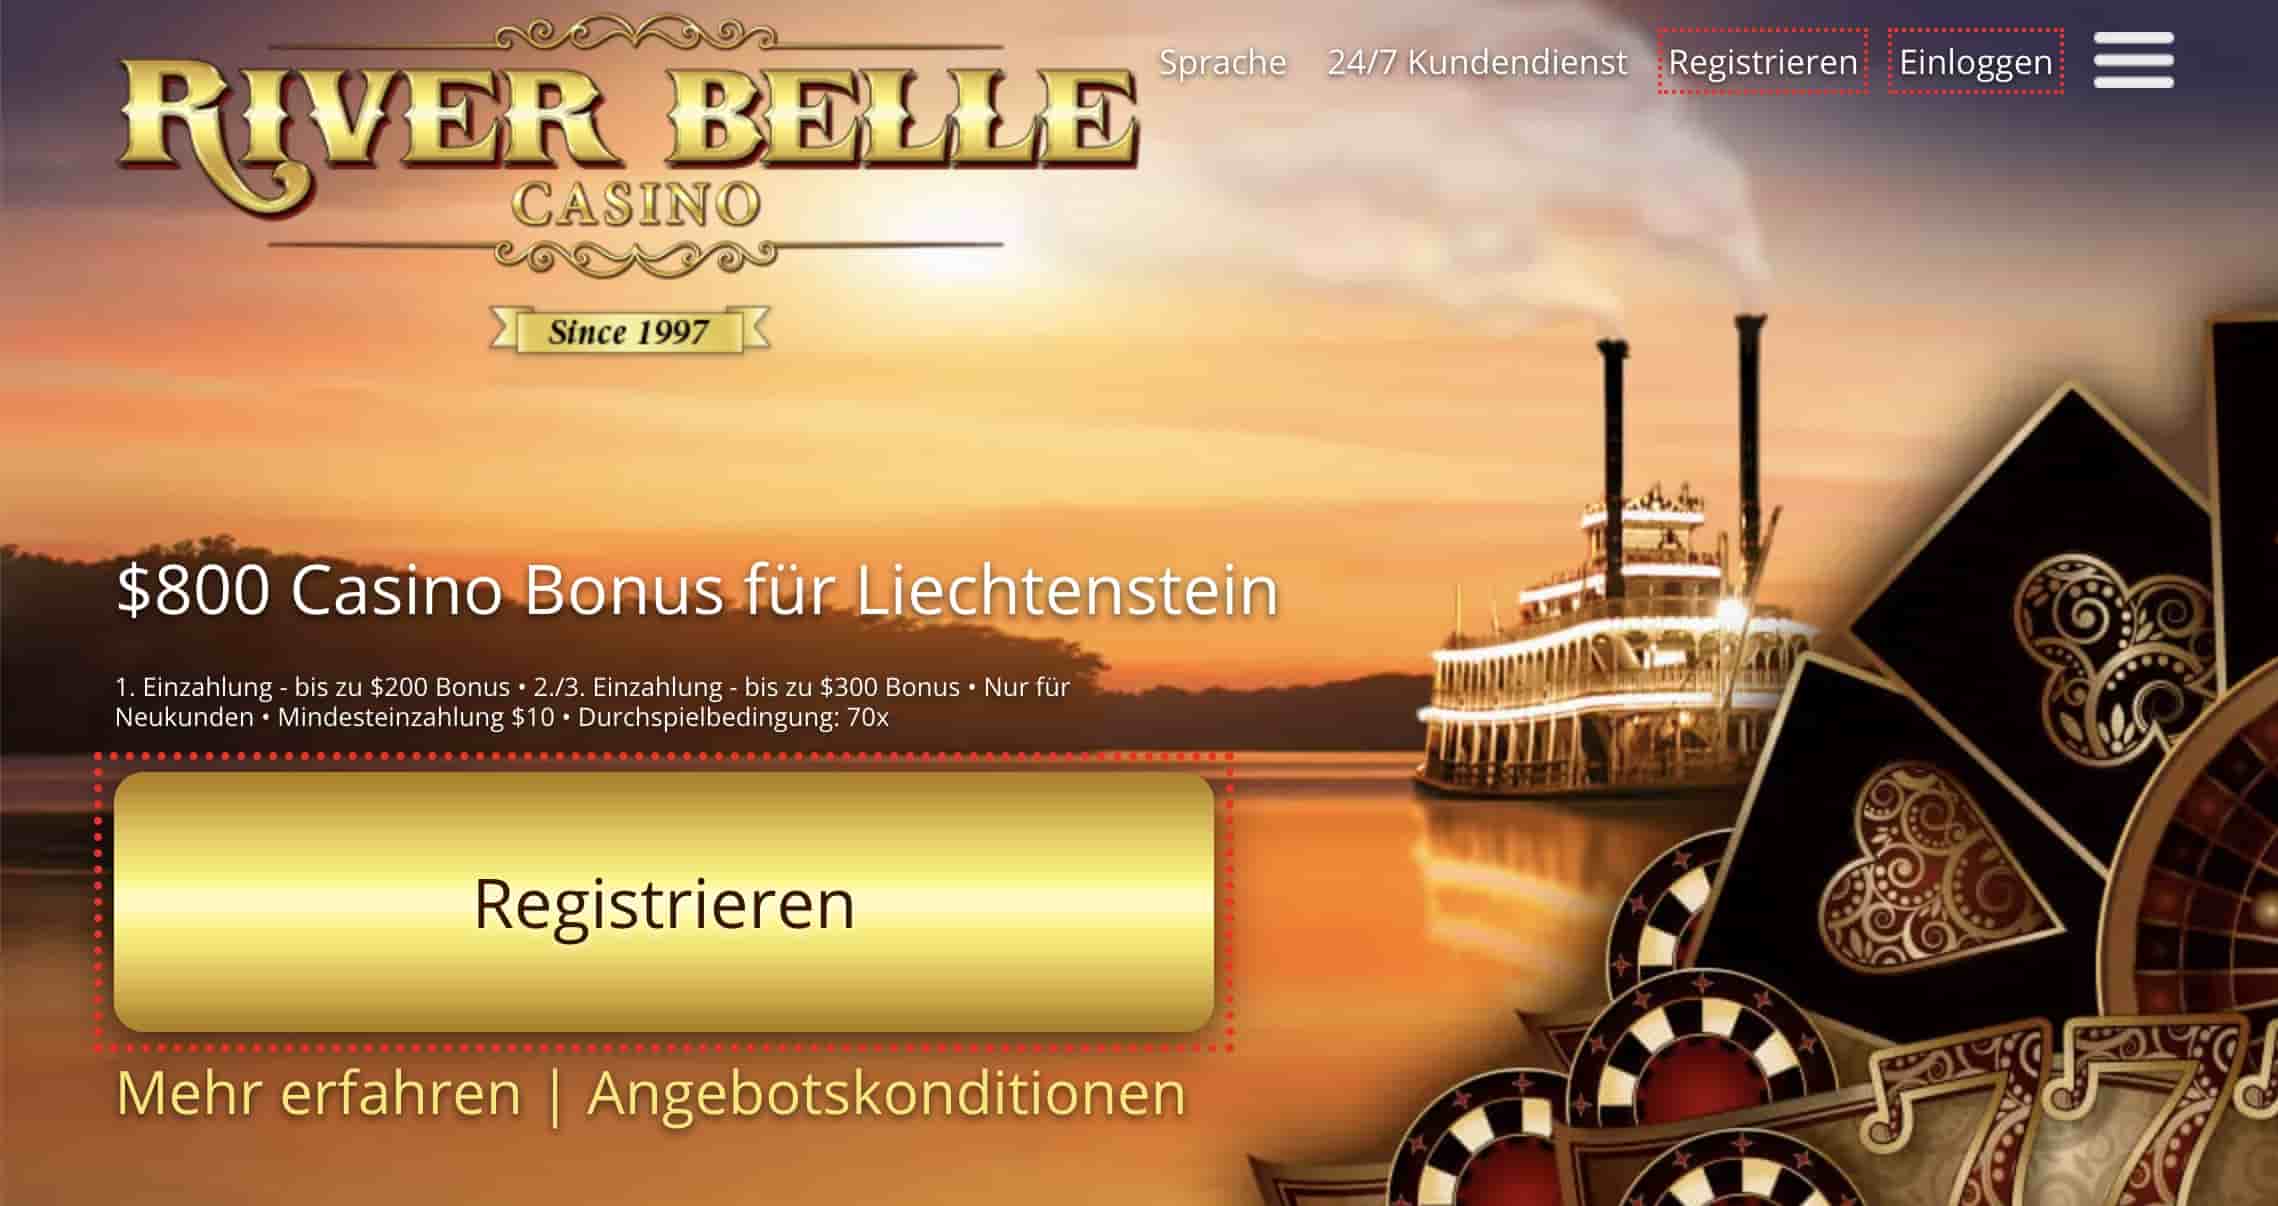 river belle casino homepage